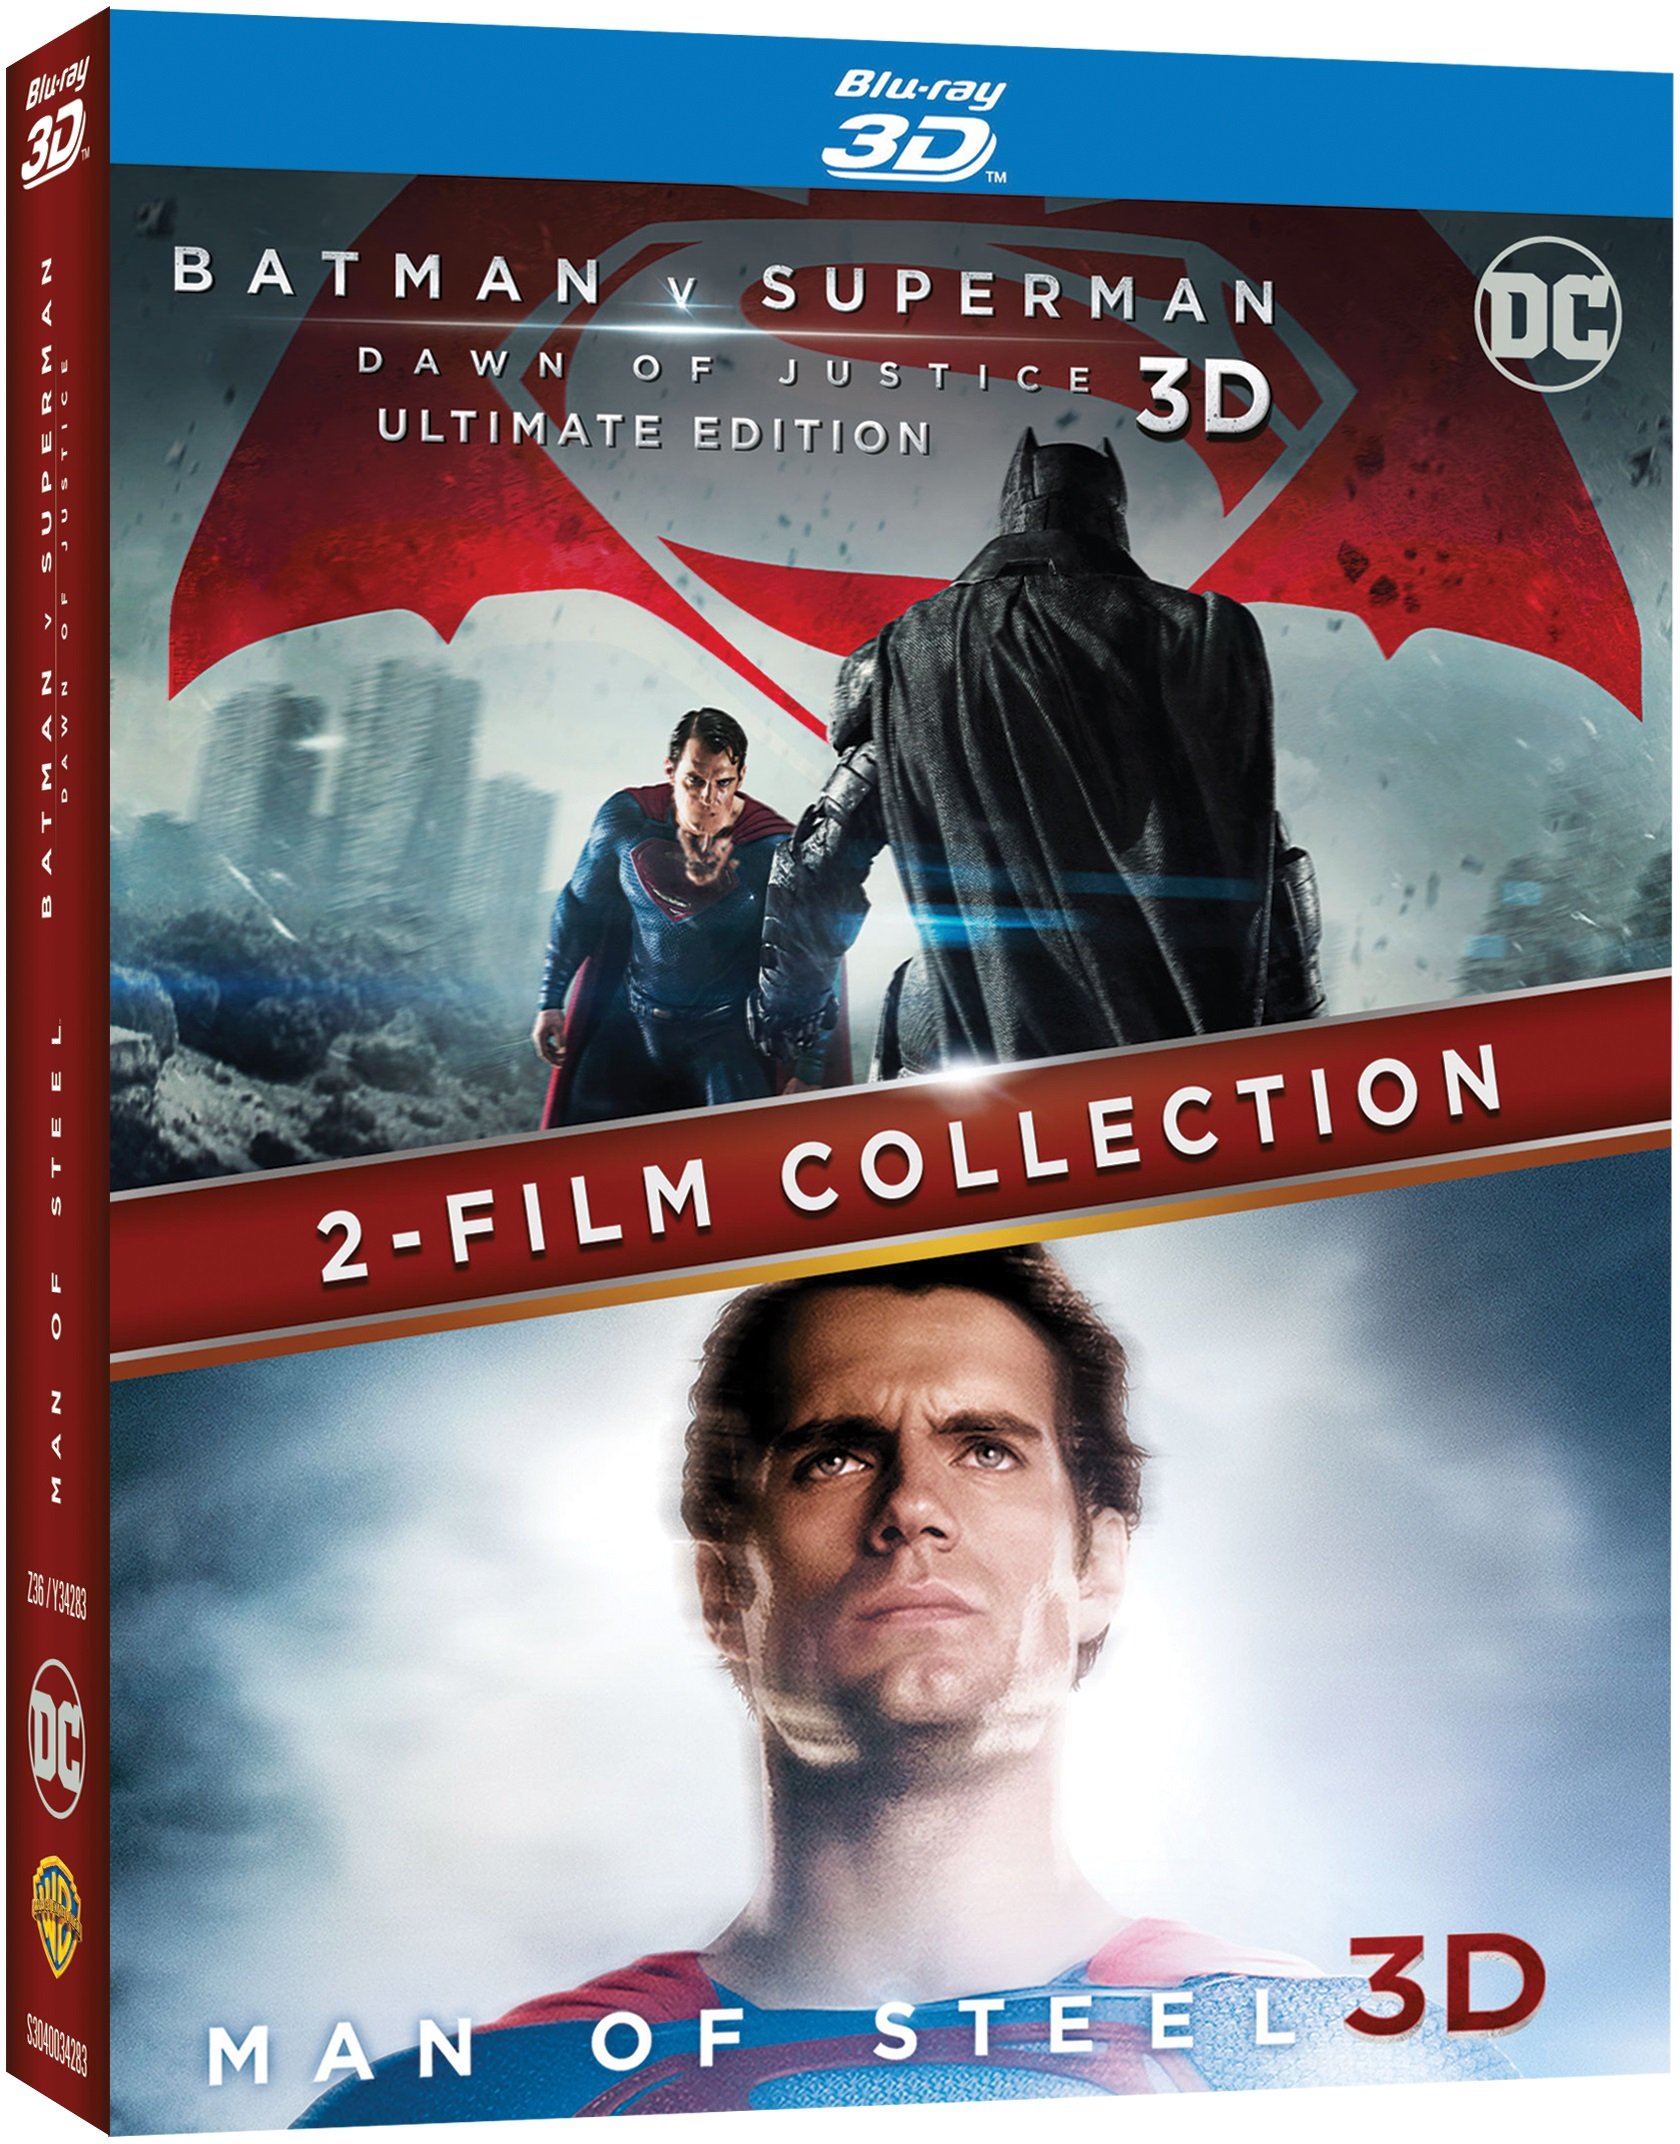 batman-v-superman-dawn-of-justice-man-of-steel-movie-purchase-or-wa